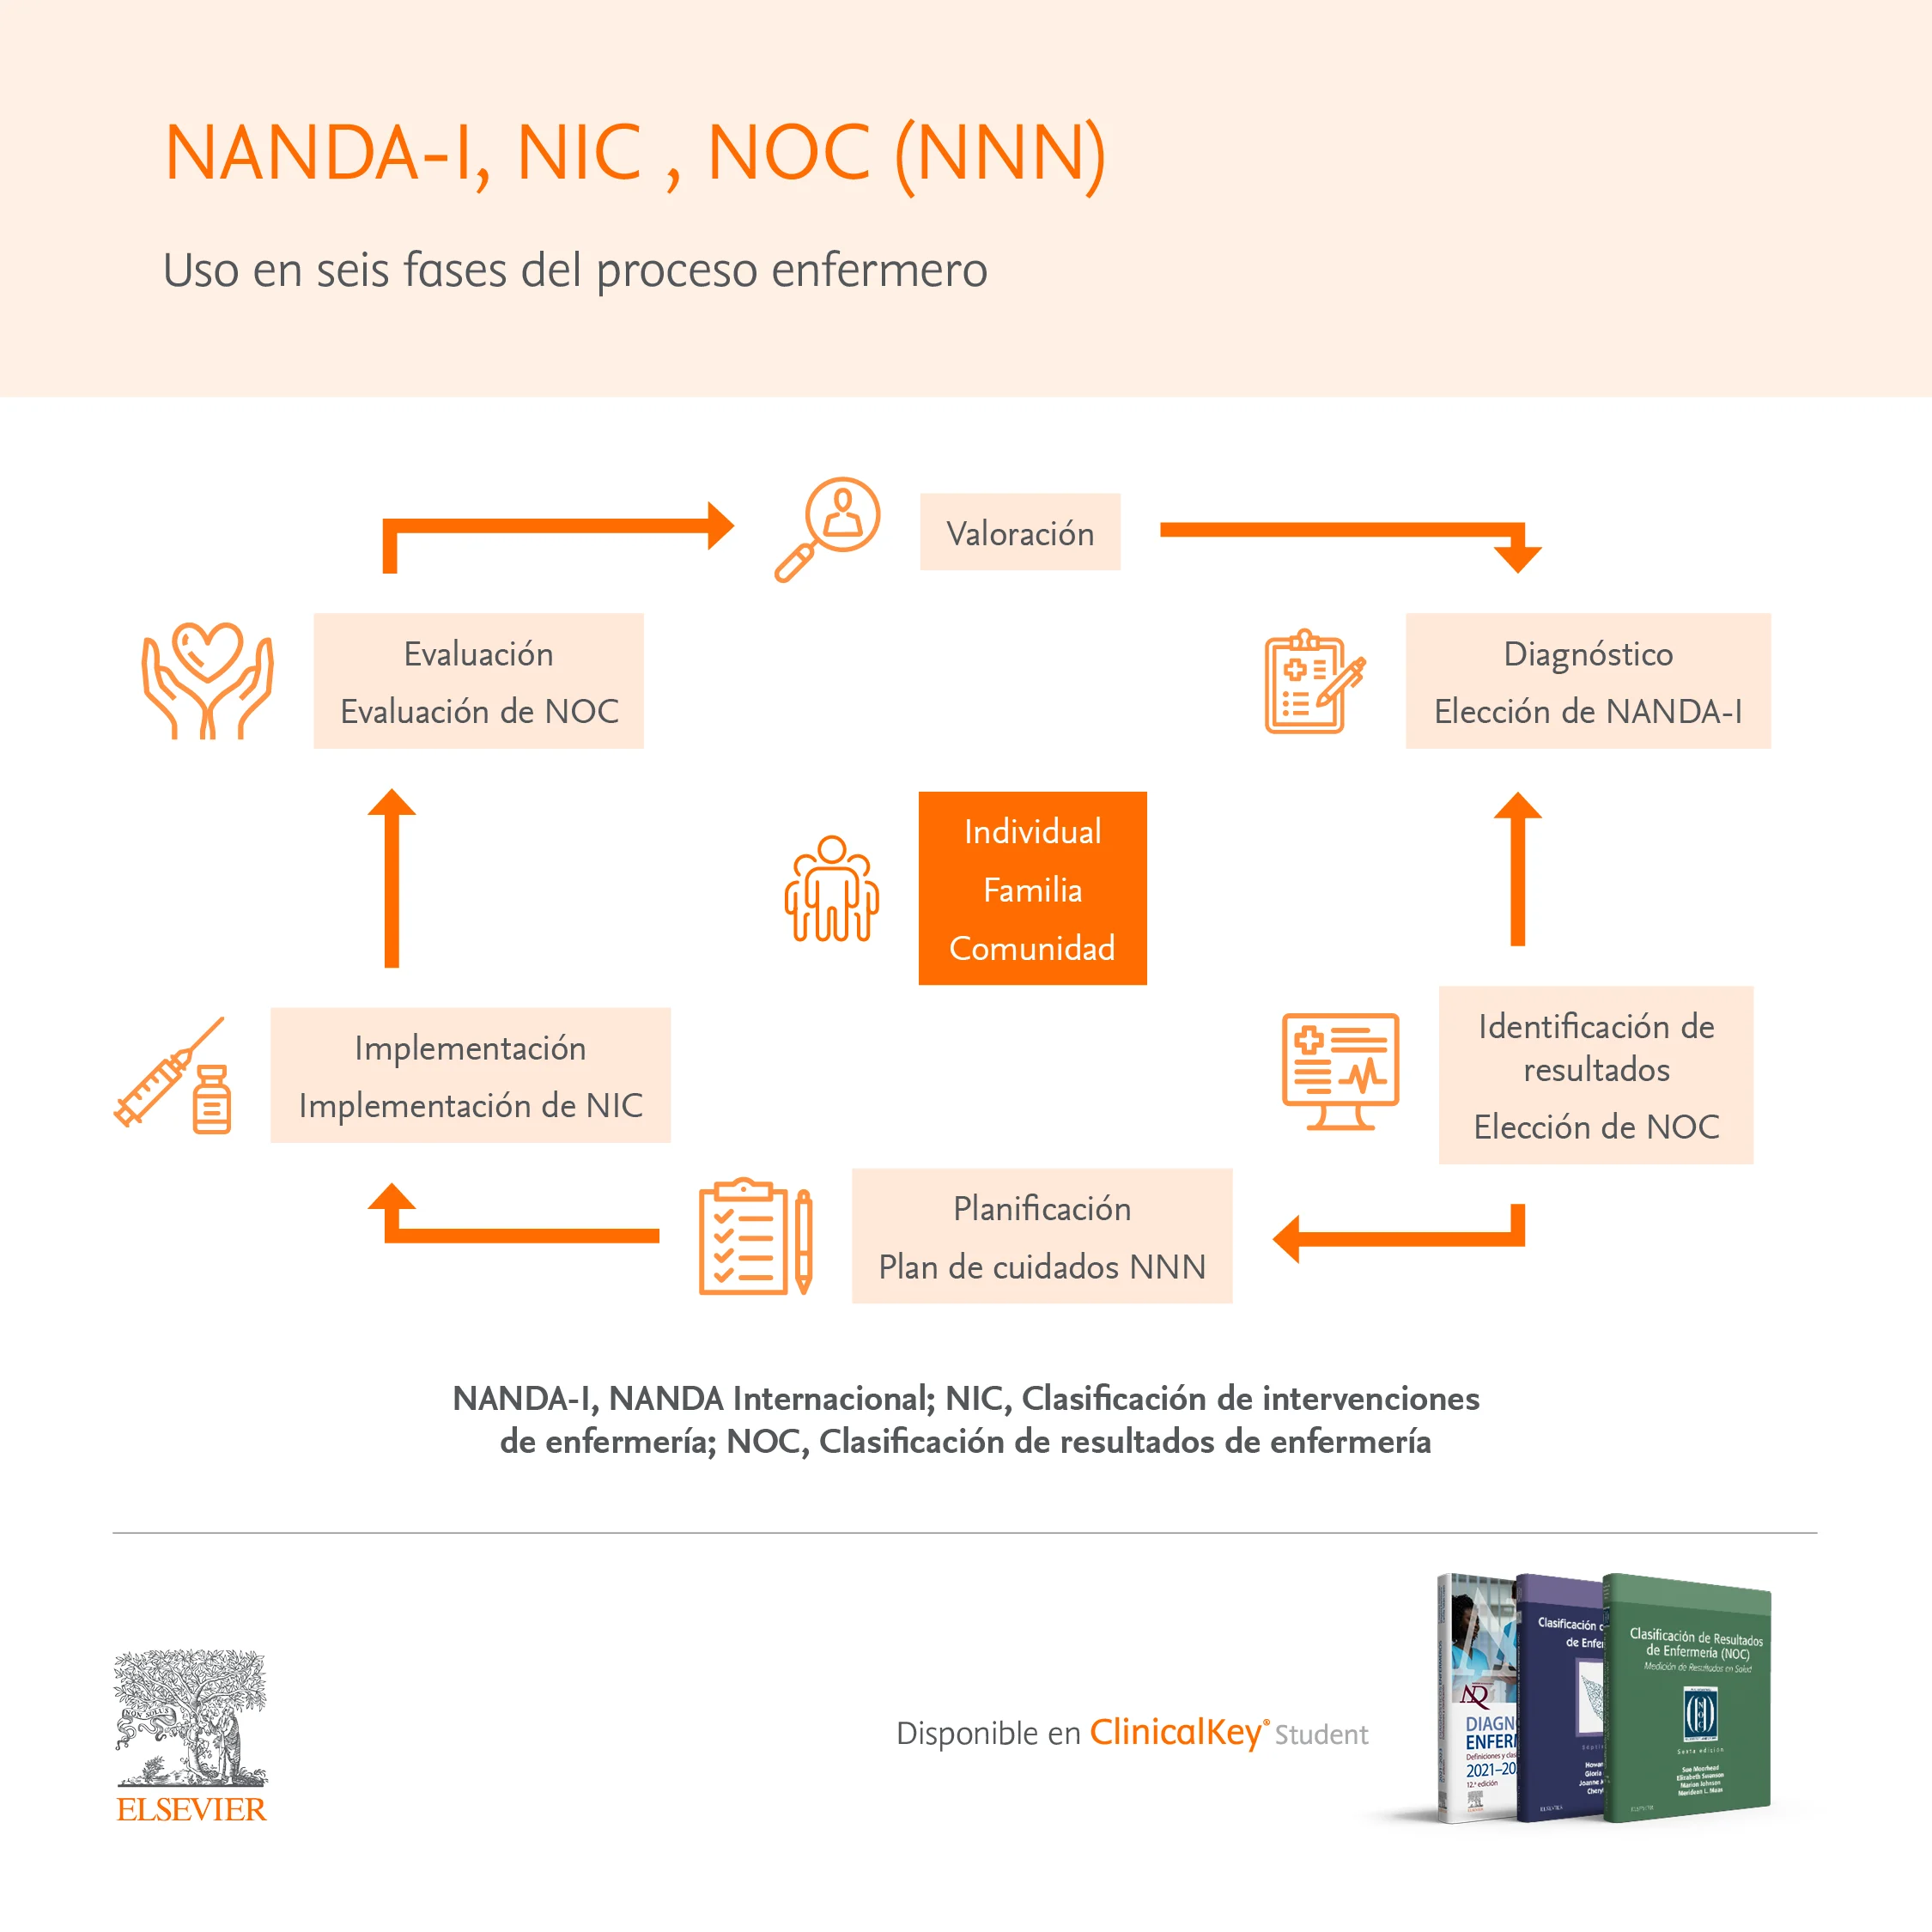 NANDA-I, NIC, (NNN)